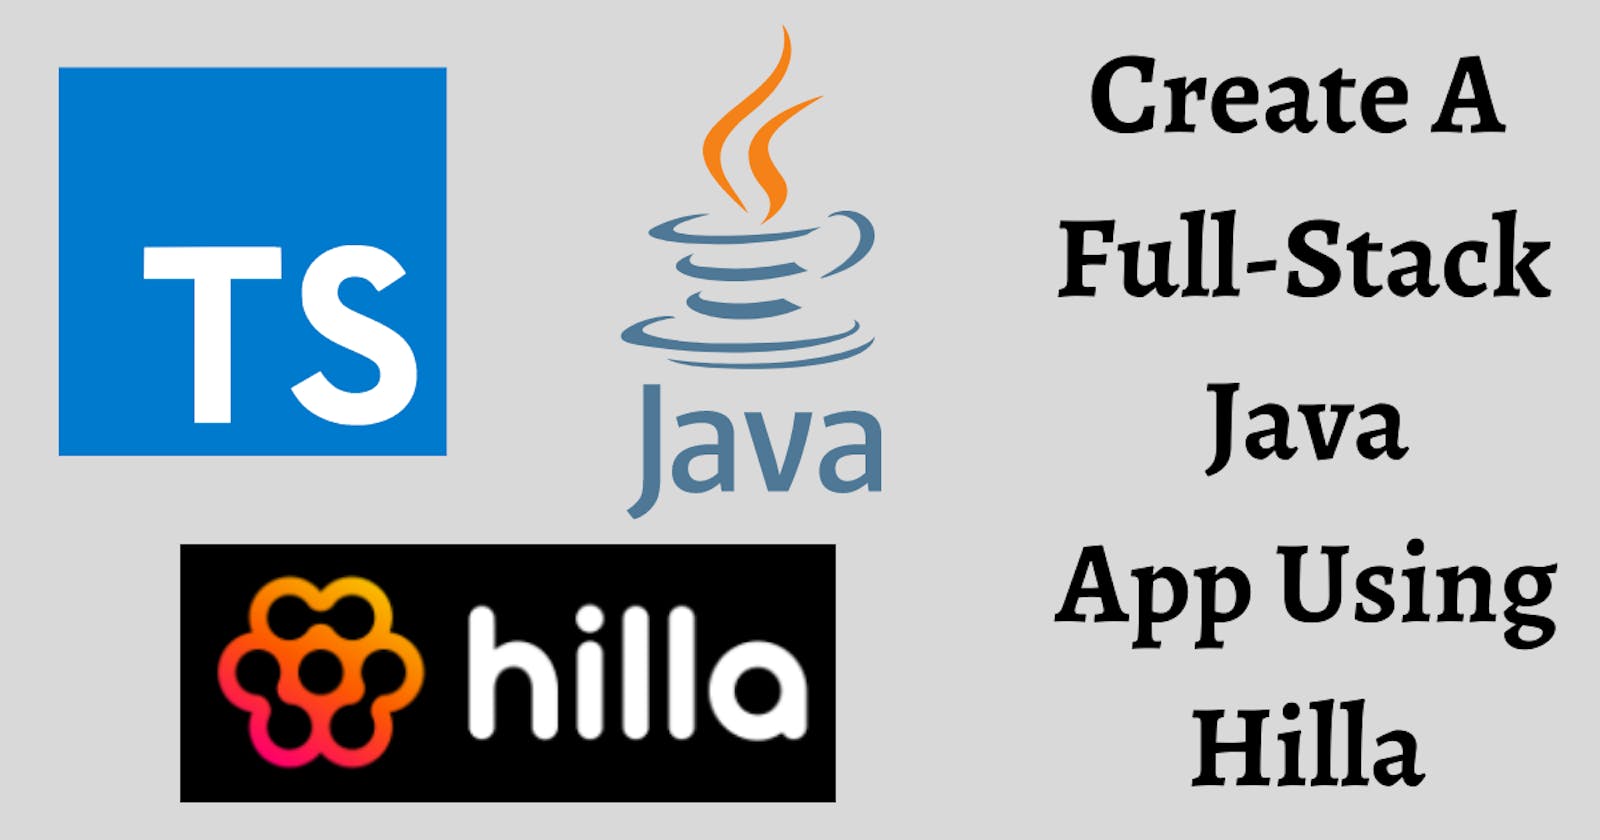 Create A Full-Stack Java App Using Hilla